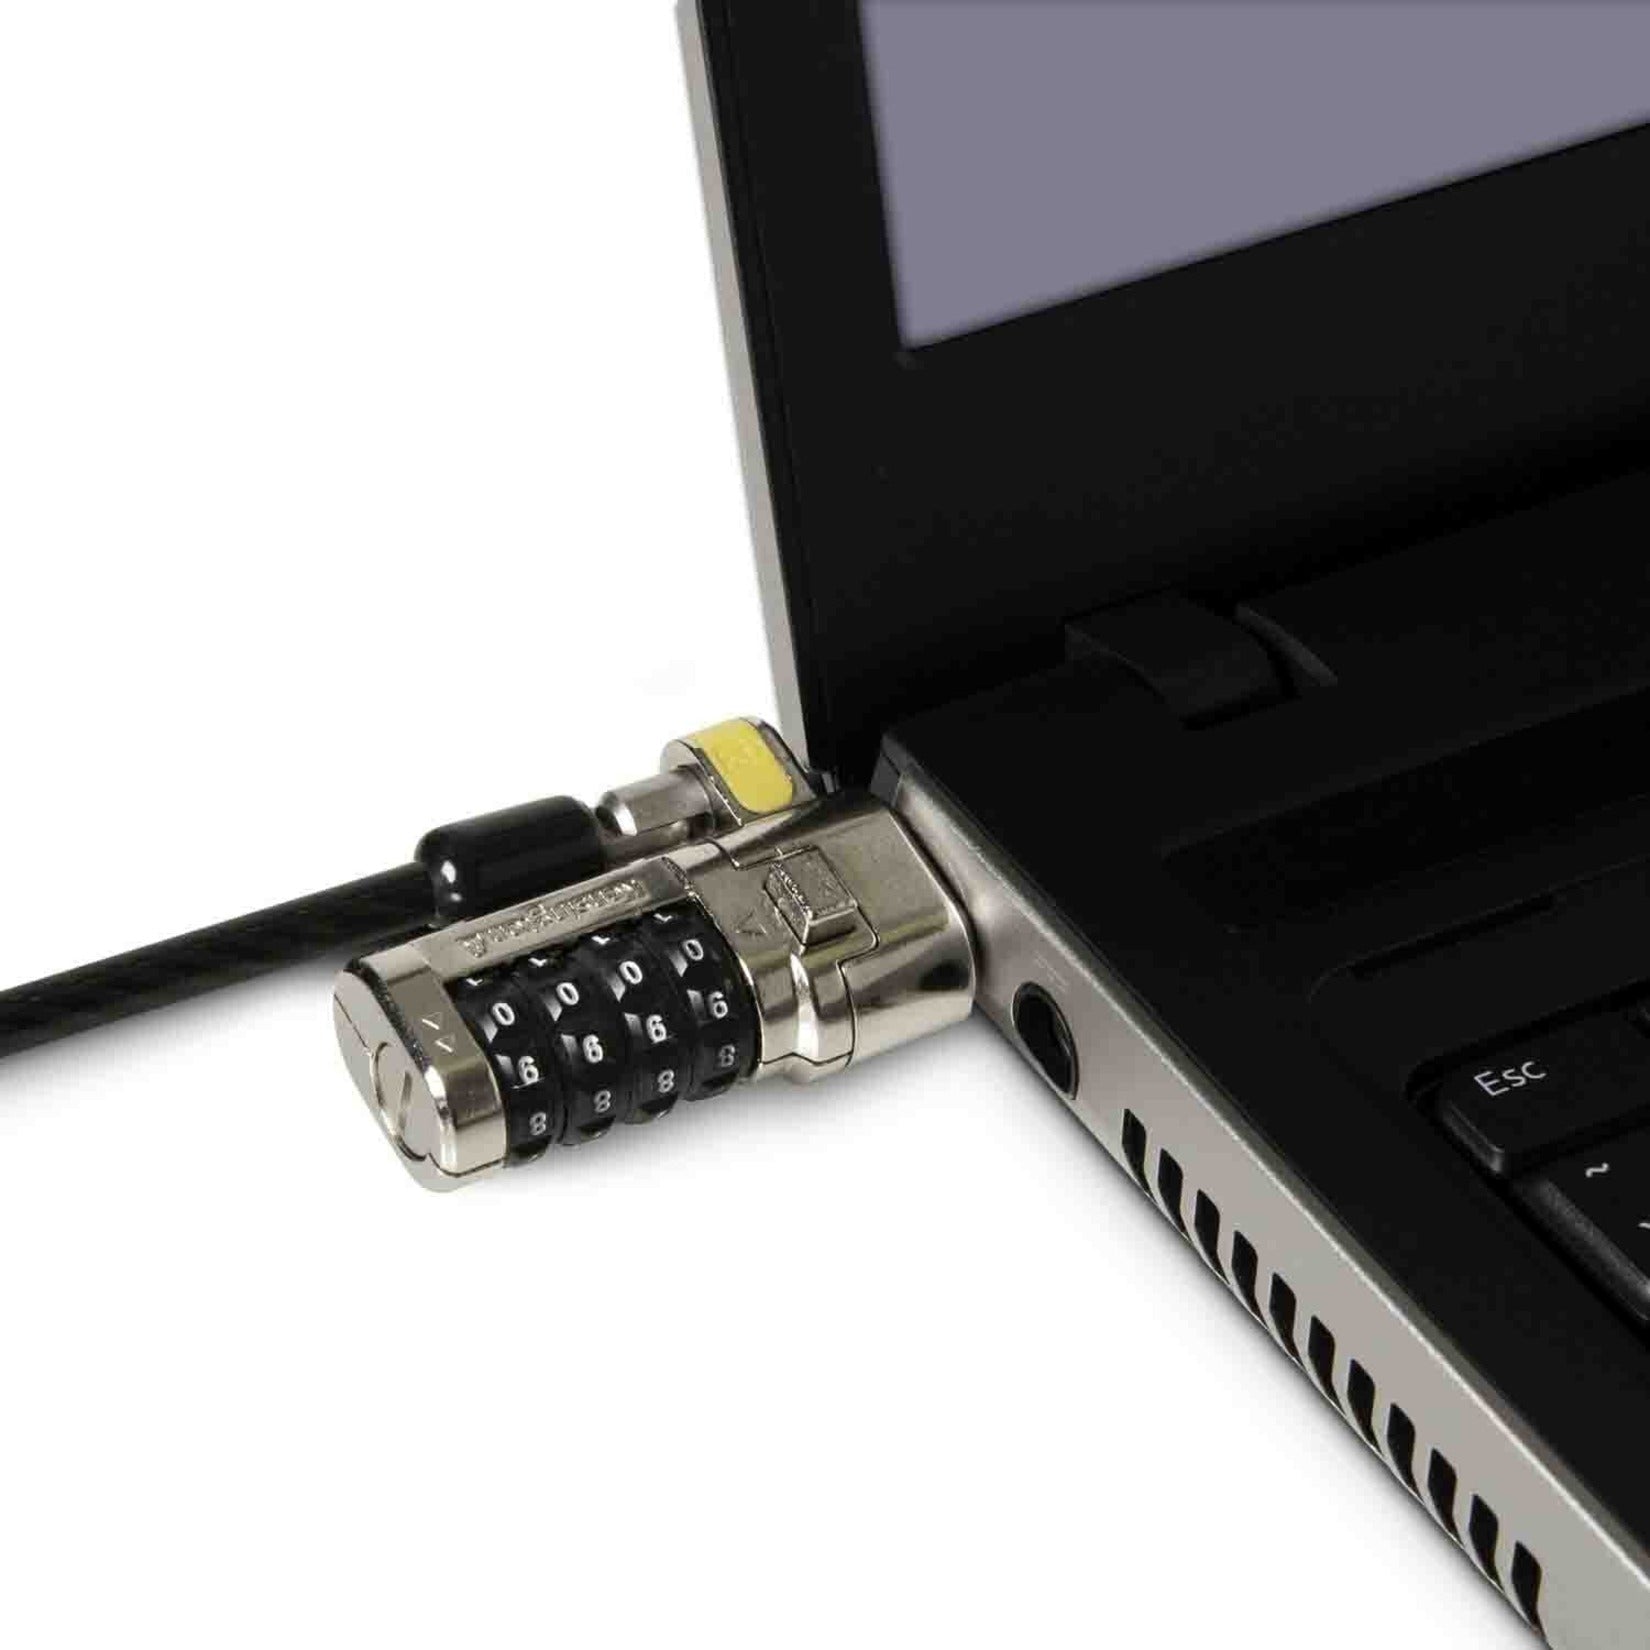 Kensington K64697US ClickSafe Combination Laptop Lock, 6 ft Cable Length, 4-wheel Lock Configuration